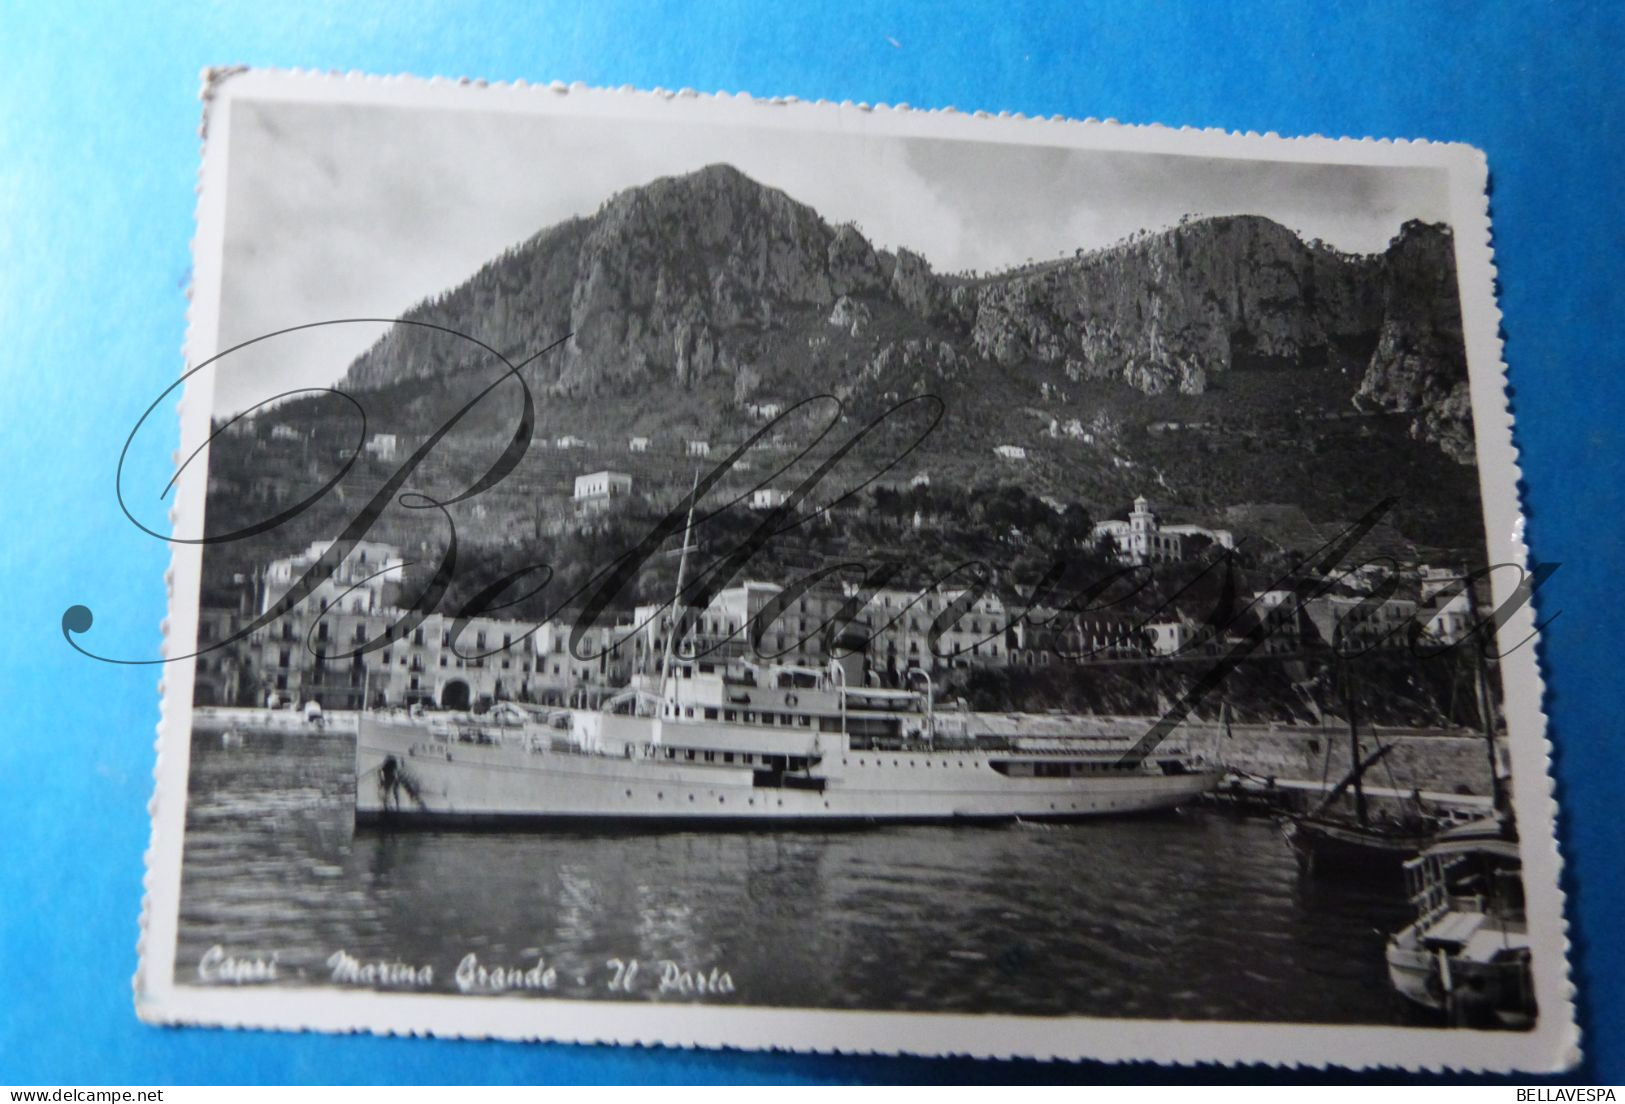 Capri Martina Grande Il Porto Bateau -Barca  "CAPRI" 1950 - Passagiersschepen